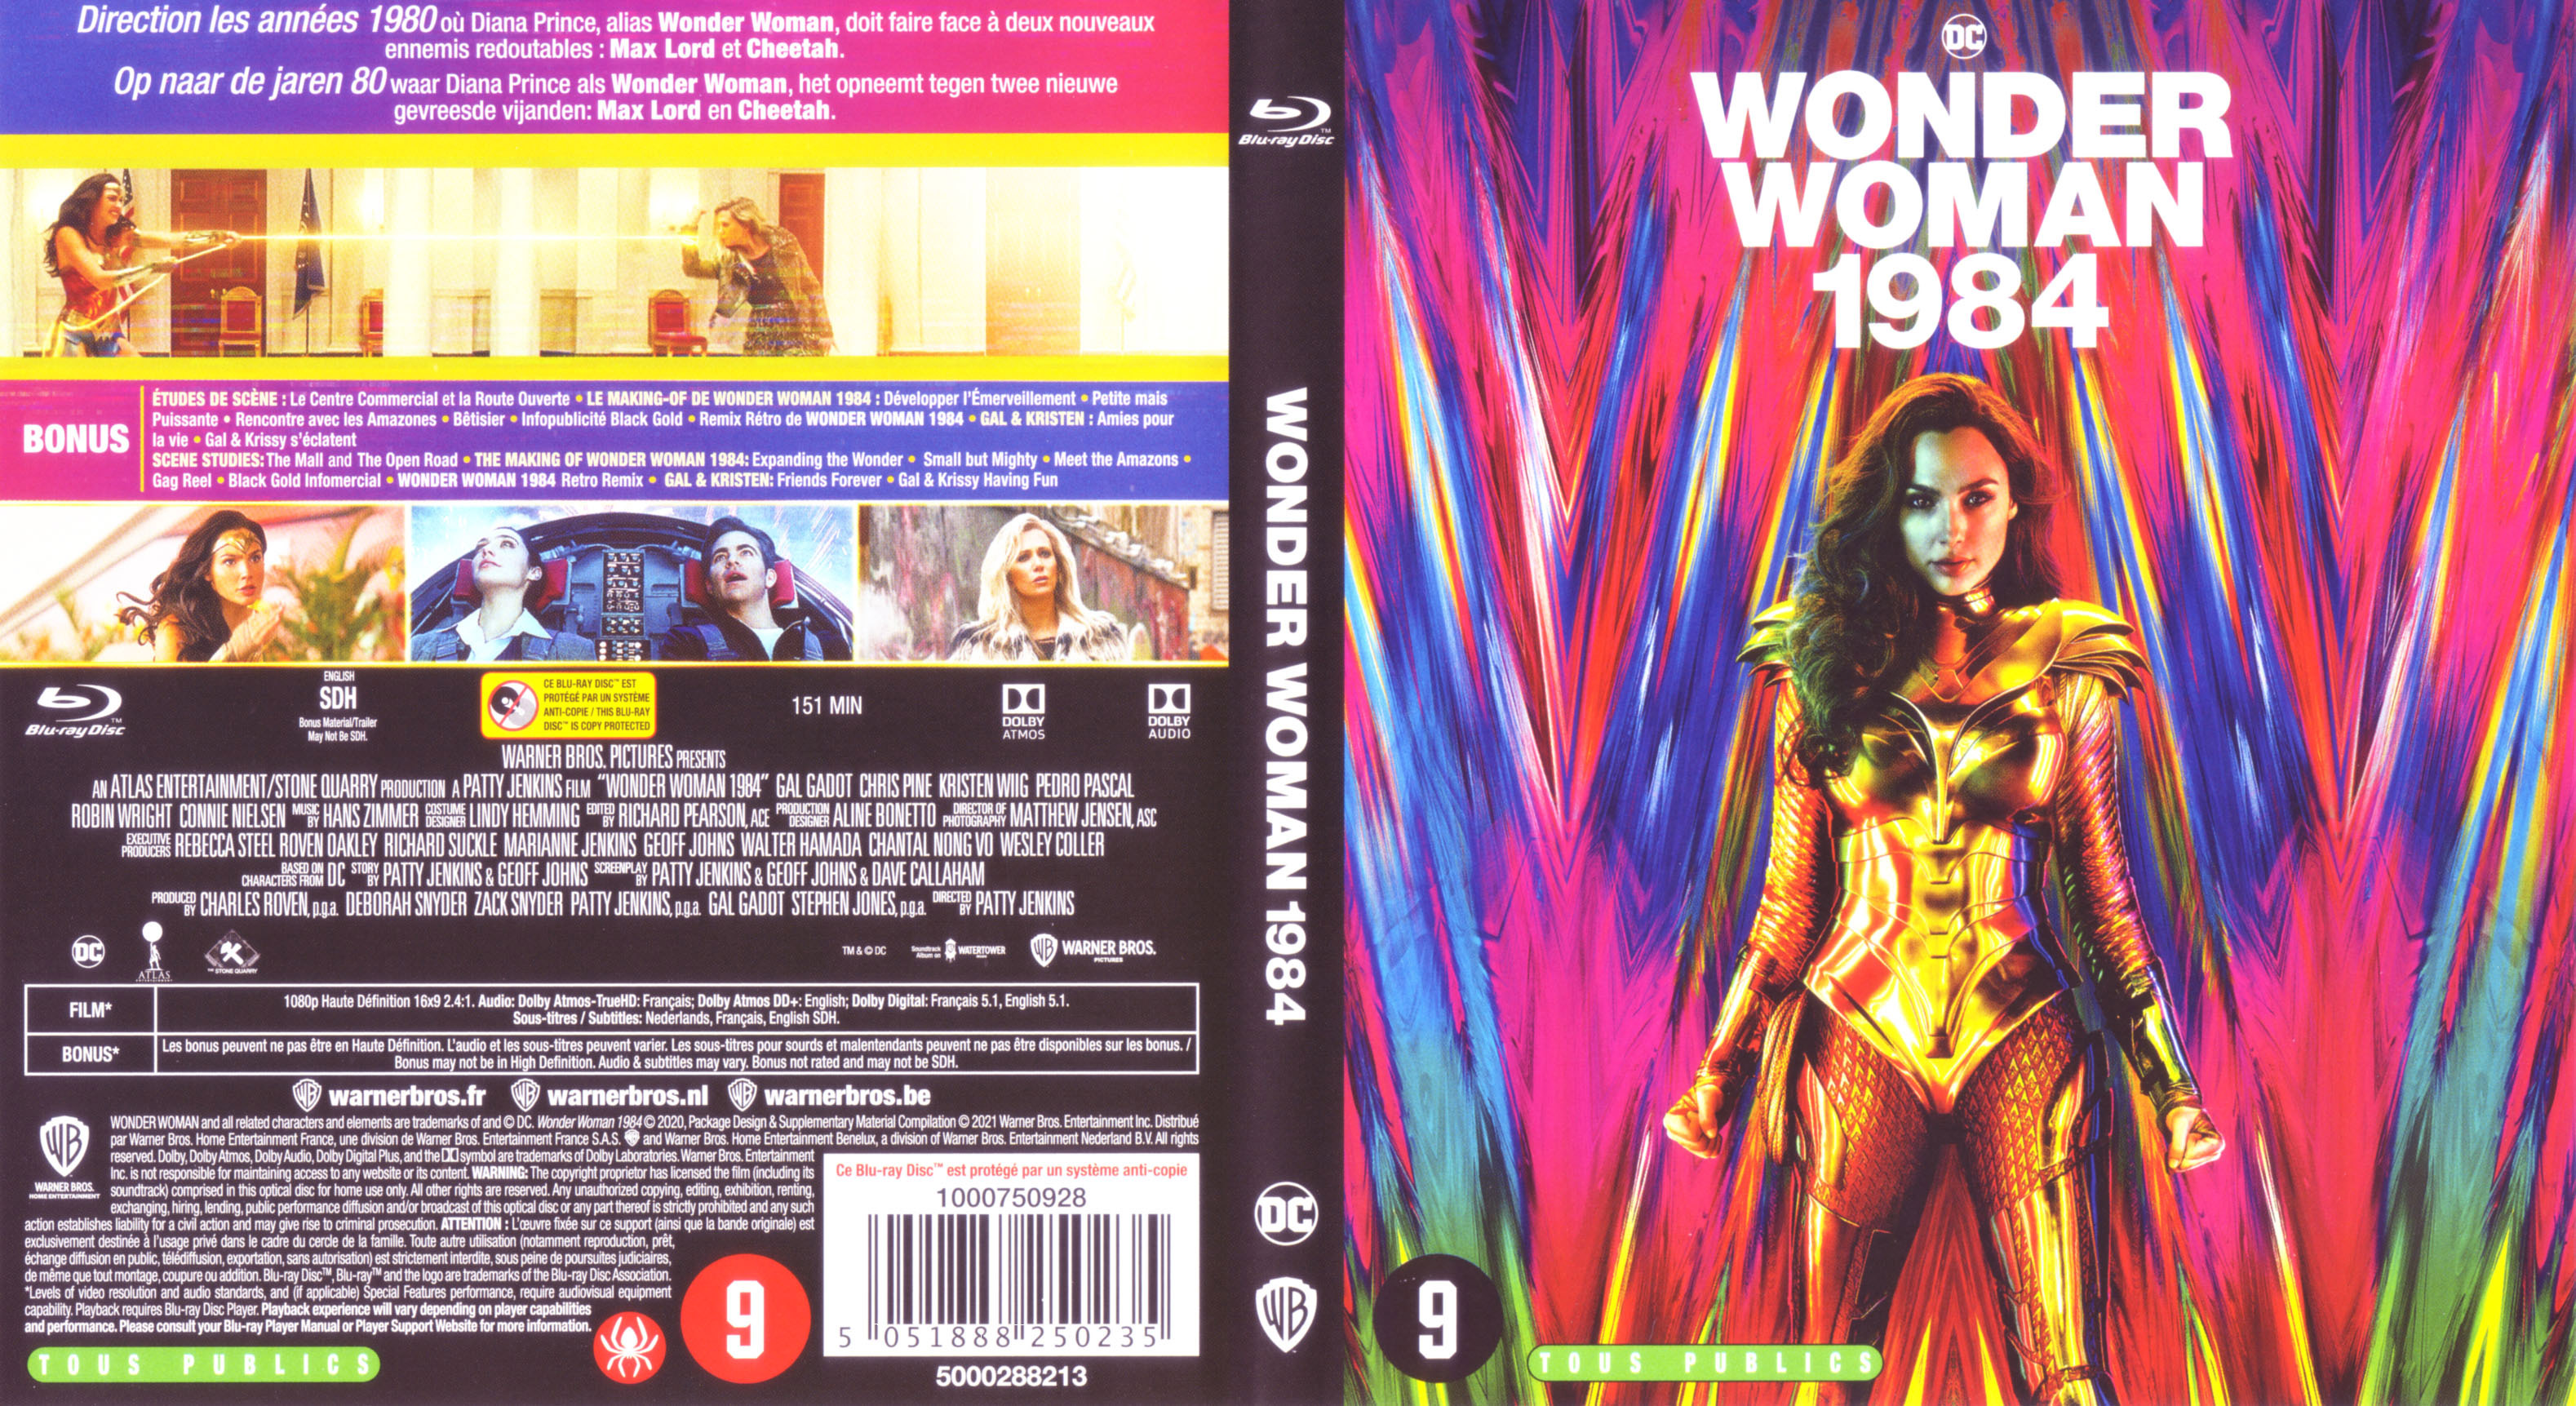 Jaquette DVD Wonder woman 1984 (BLU-RAY)